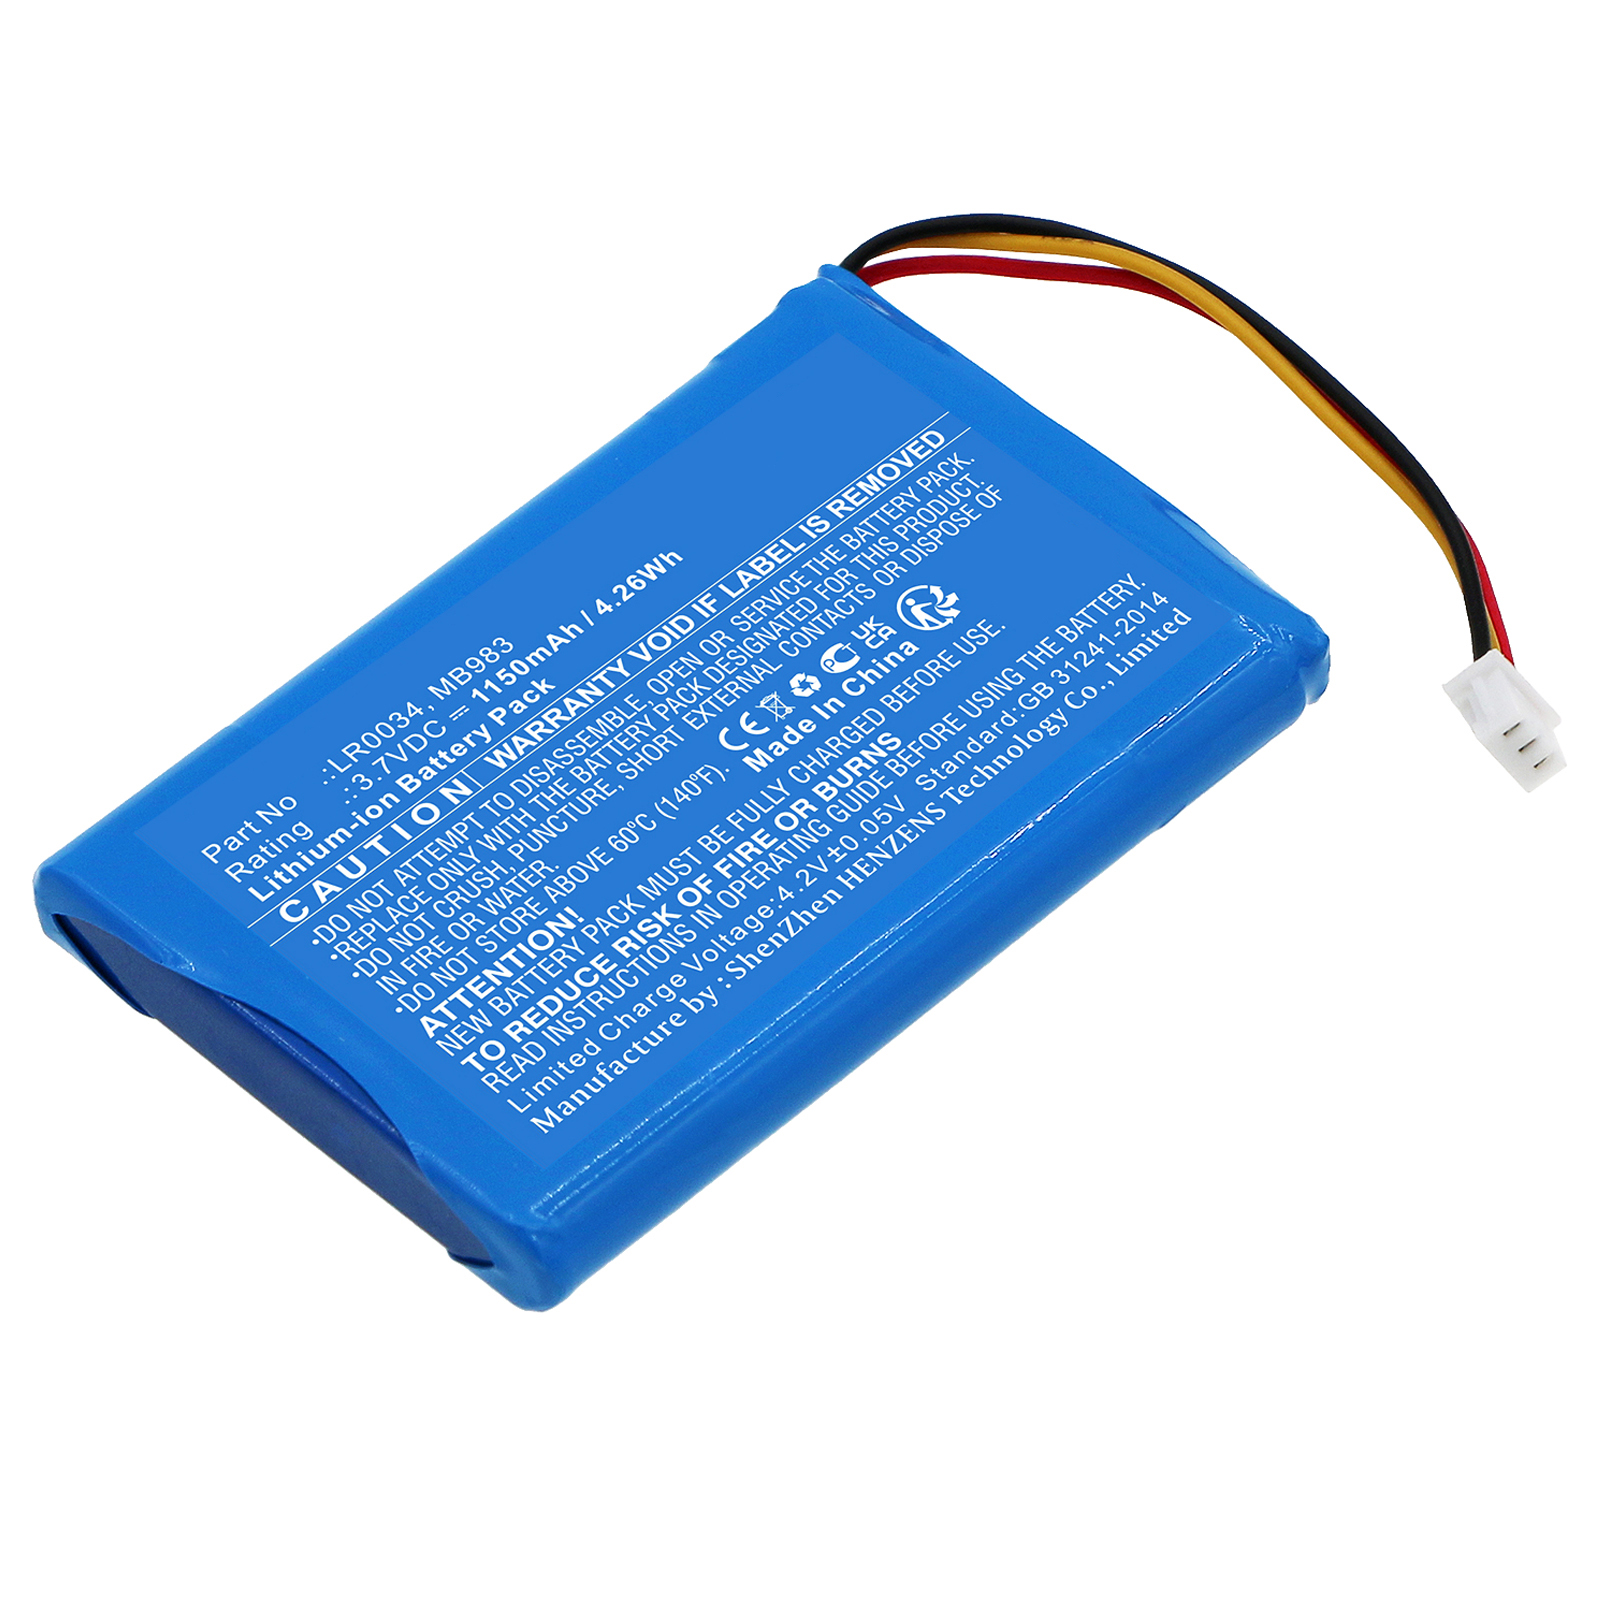 Synergy Digital Medical Battery, Compatible with MIR LR0034 Medical Battery (Li-ion, 3.7V, 1150mAh)